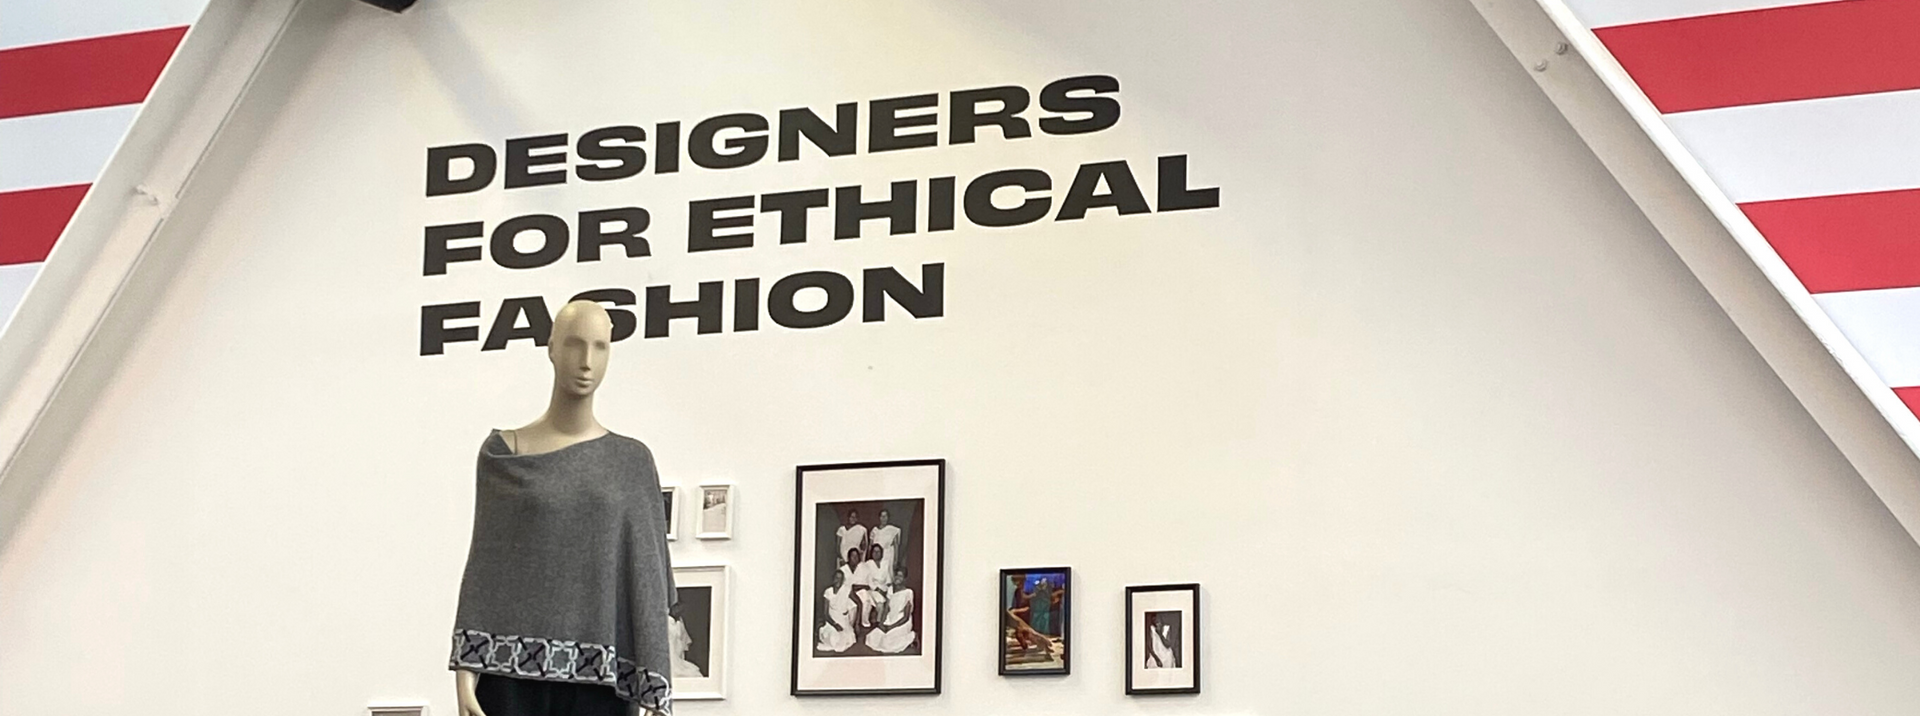 Milan Fashion Week 2022 - Designers for Ethical Fashion